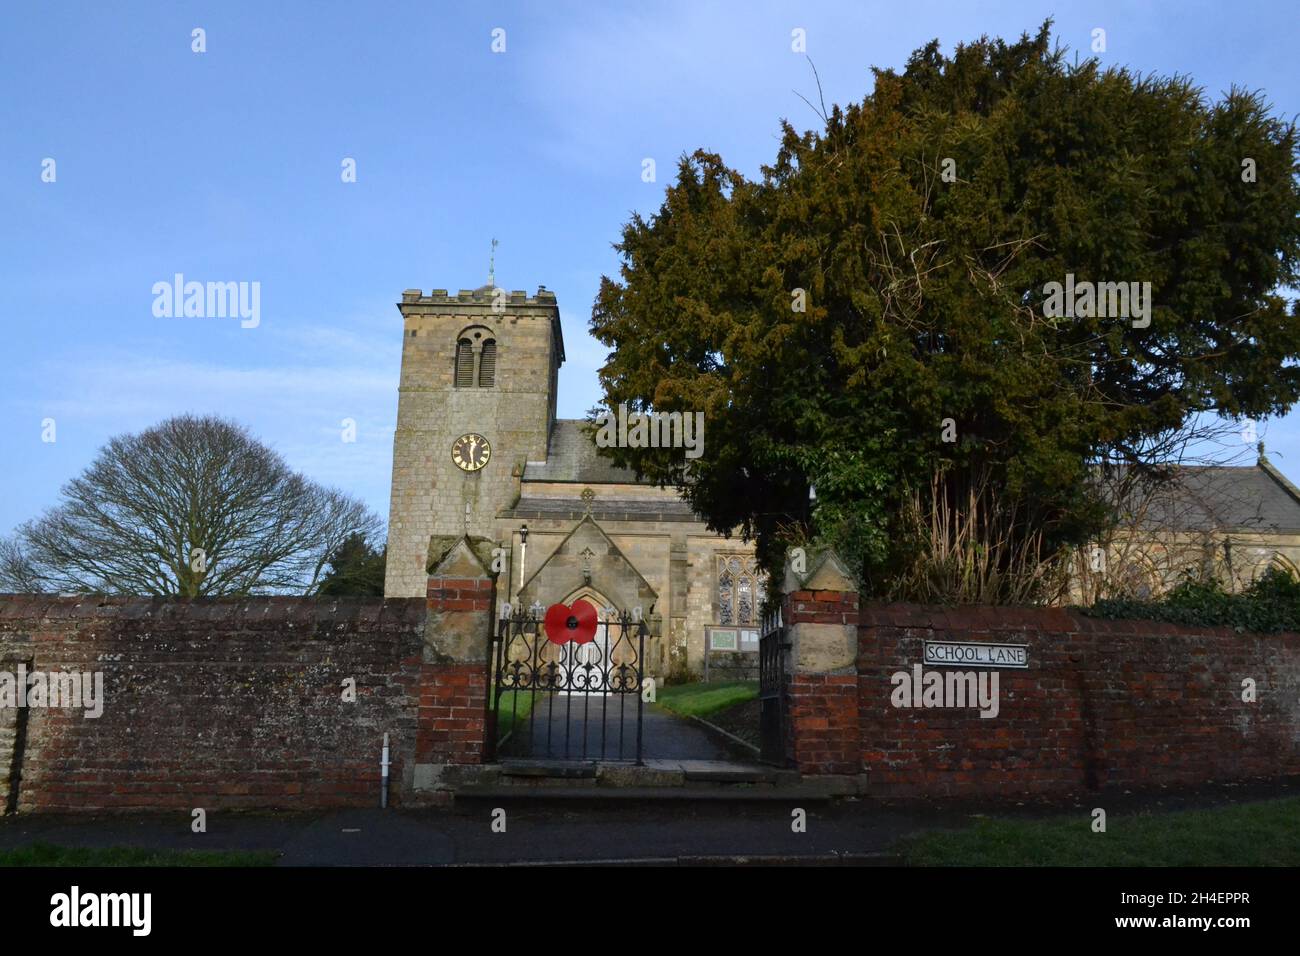 Rudston Church - Gate Way And Path To The Church Door - Church Tower - Blue Sky Stock Photo